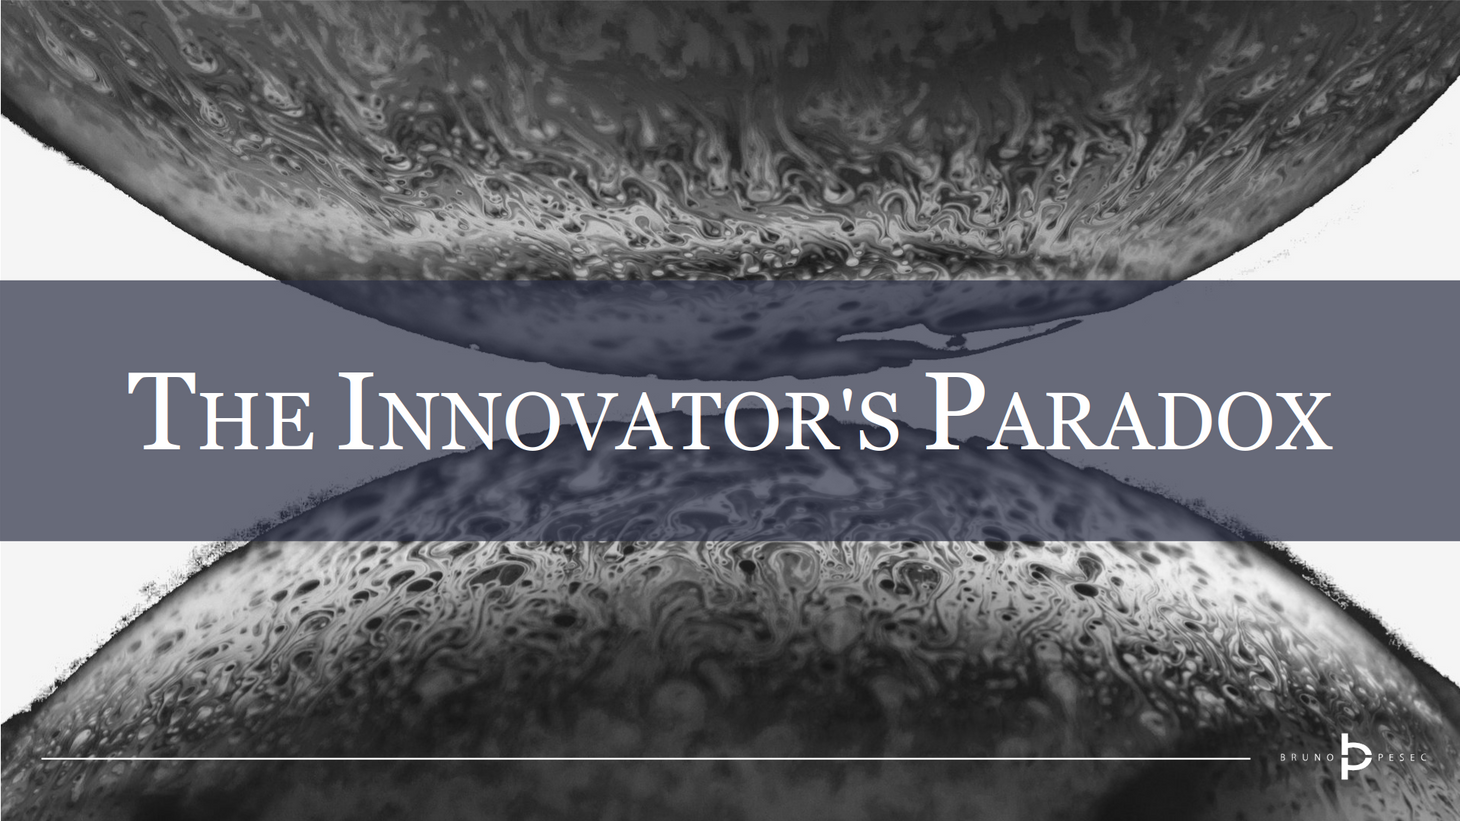 The innovator's paradox